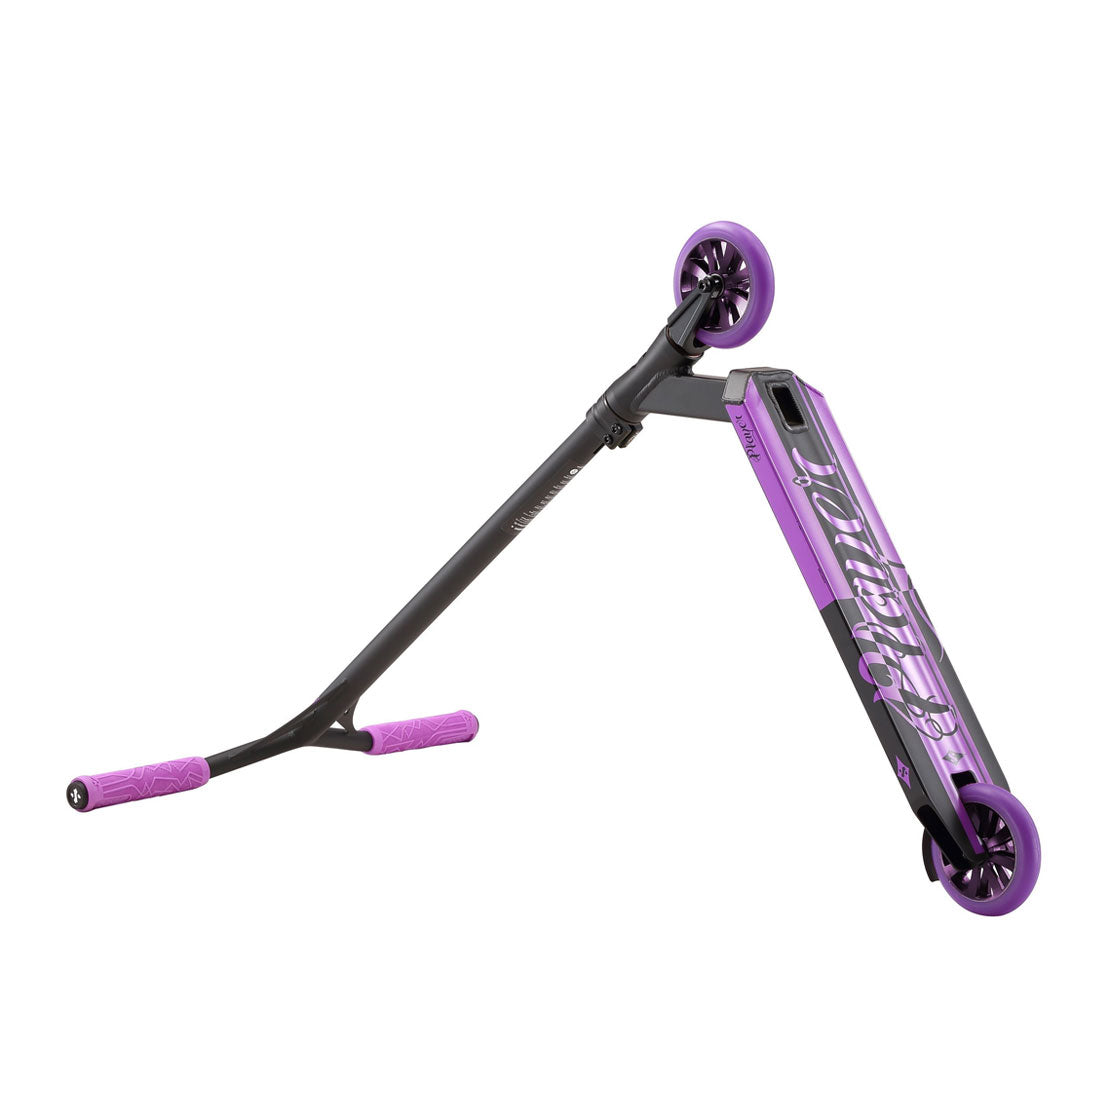 Sacrifice Player V3 - Black/Purple Matte Scooter Completes Trick